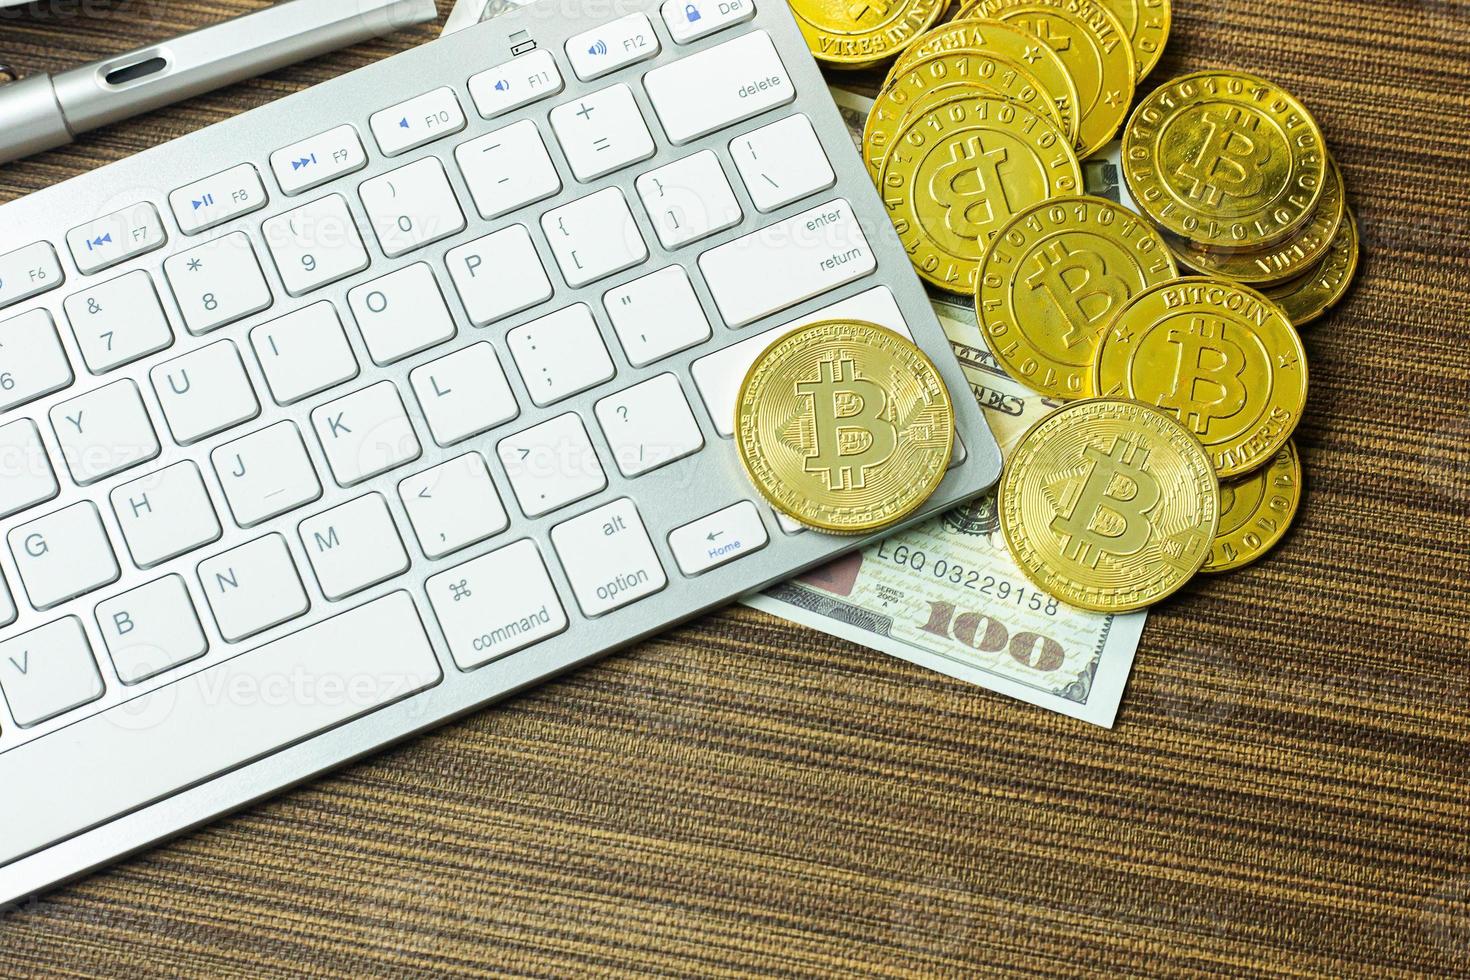 moeda bitcoin no teclado prateado para conteúdo de criptomoeda. foto